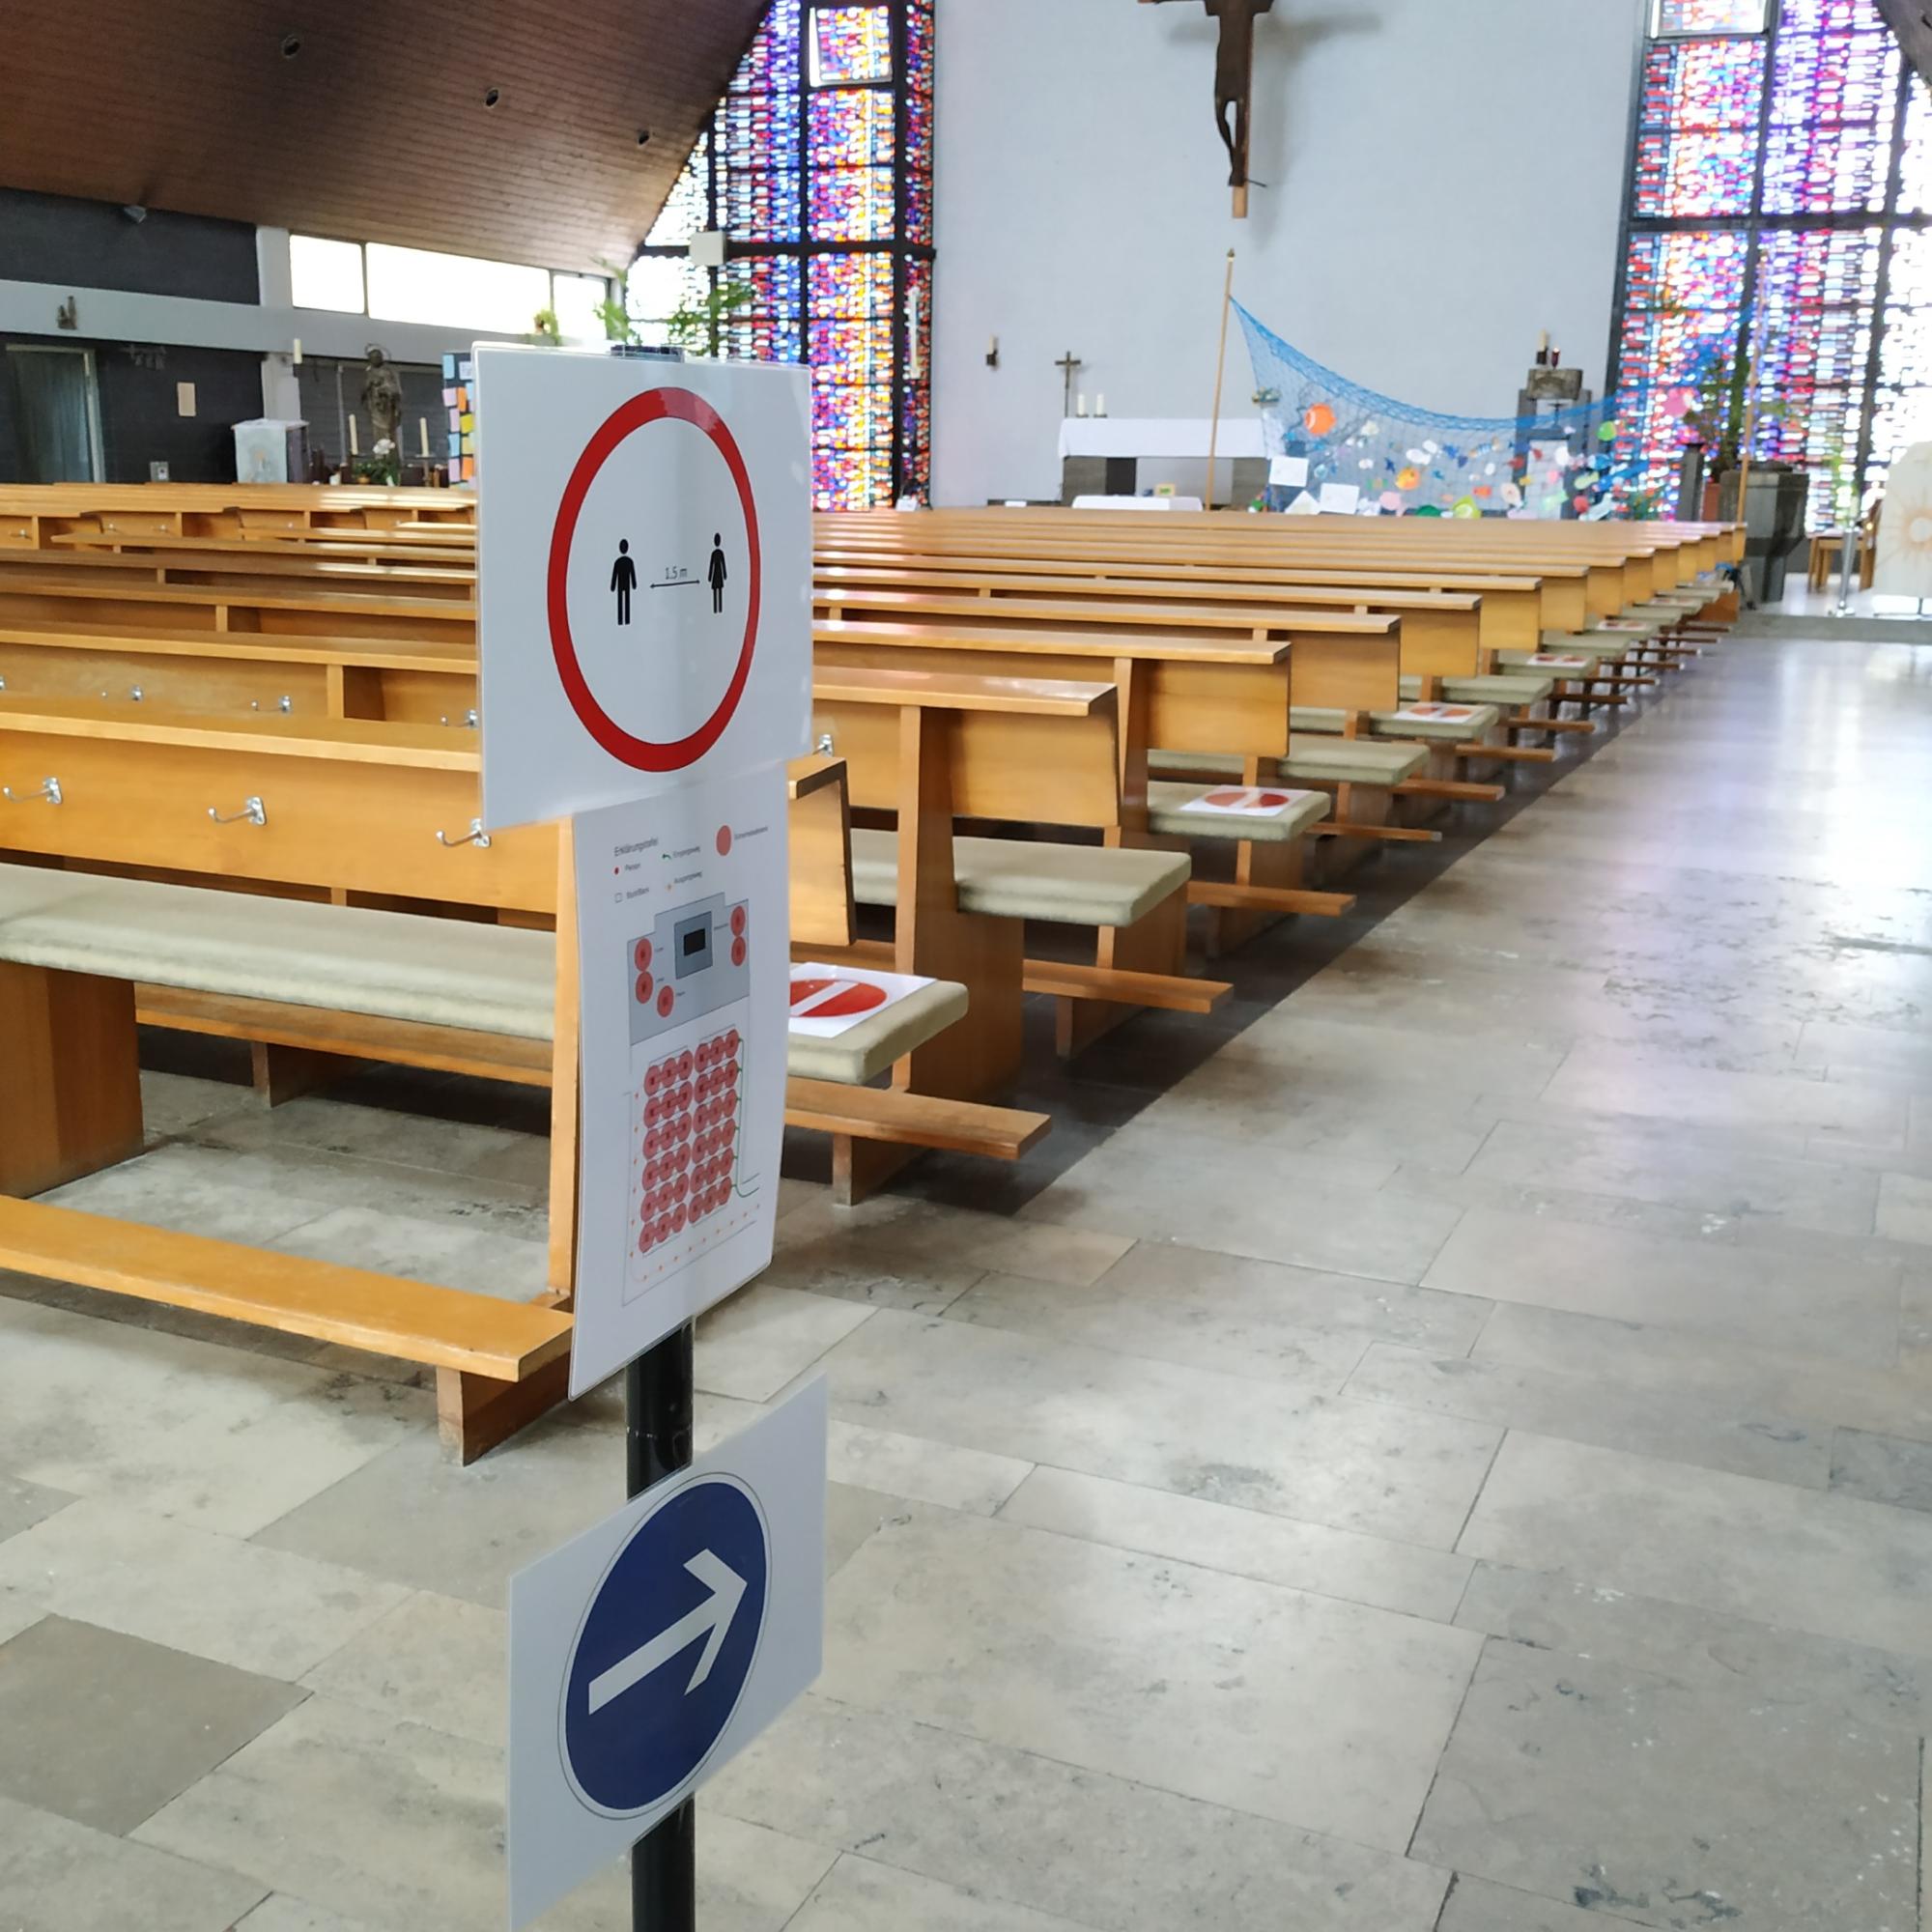 Wegeschild in der Kirche